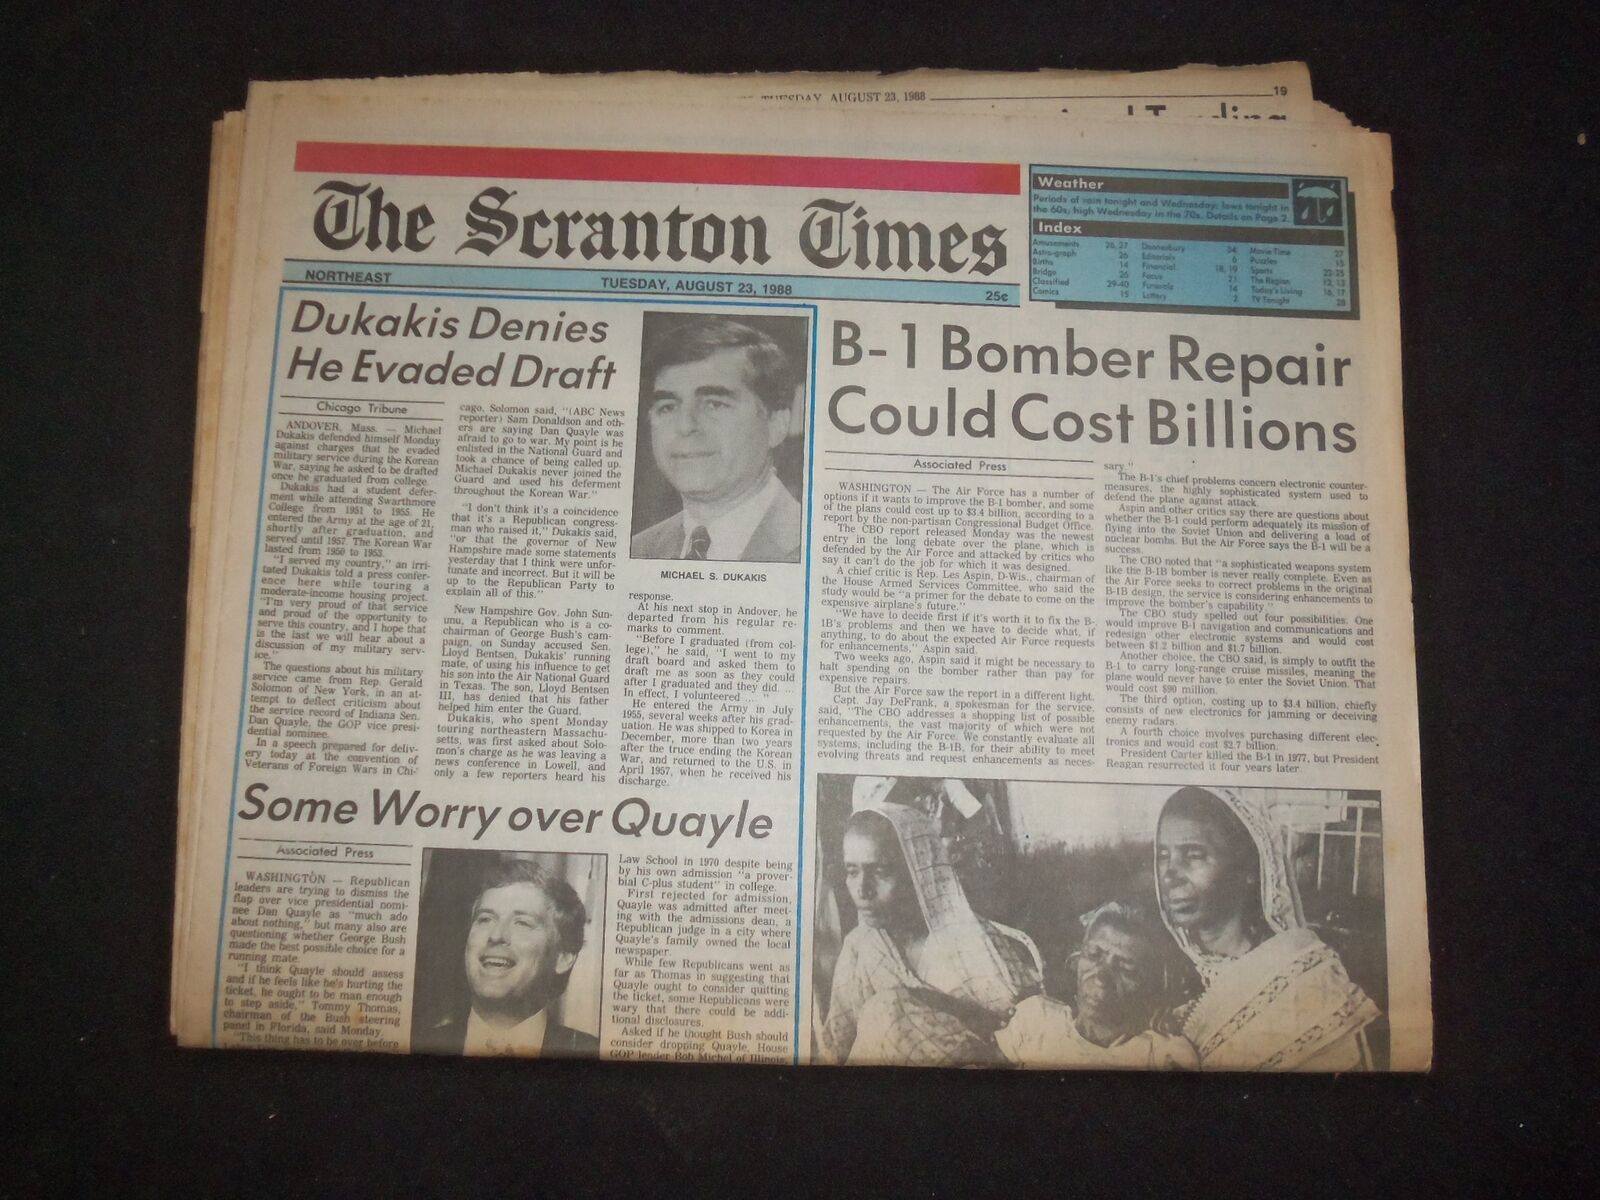 1988 AUG 23 THE SCRANTON TIMES NEWSPAPER - DUKAKIS DENIES EVADING DRAFT- NP 8329